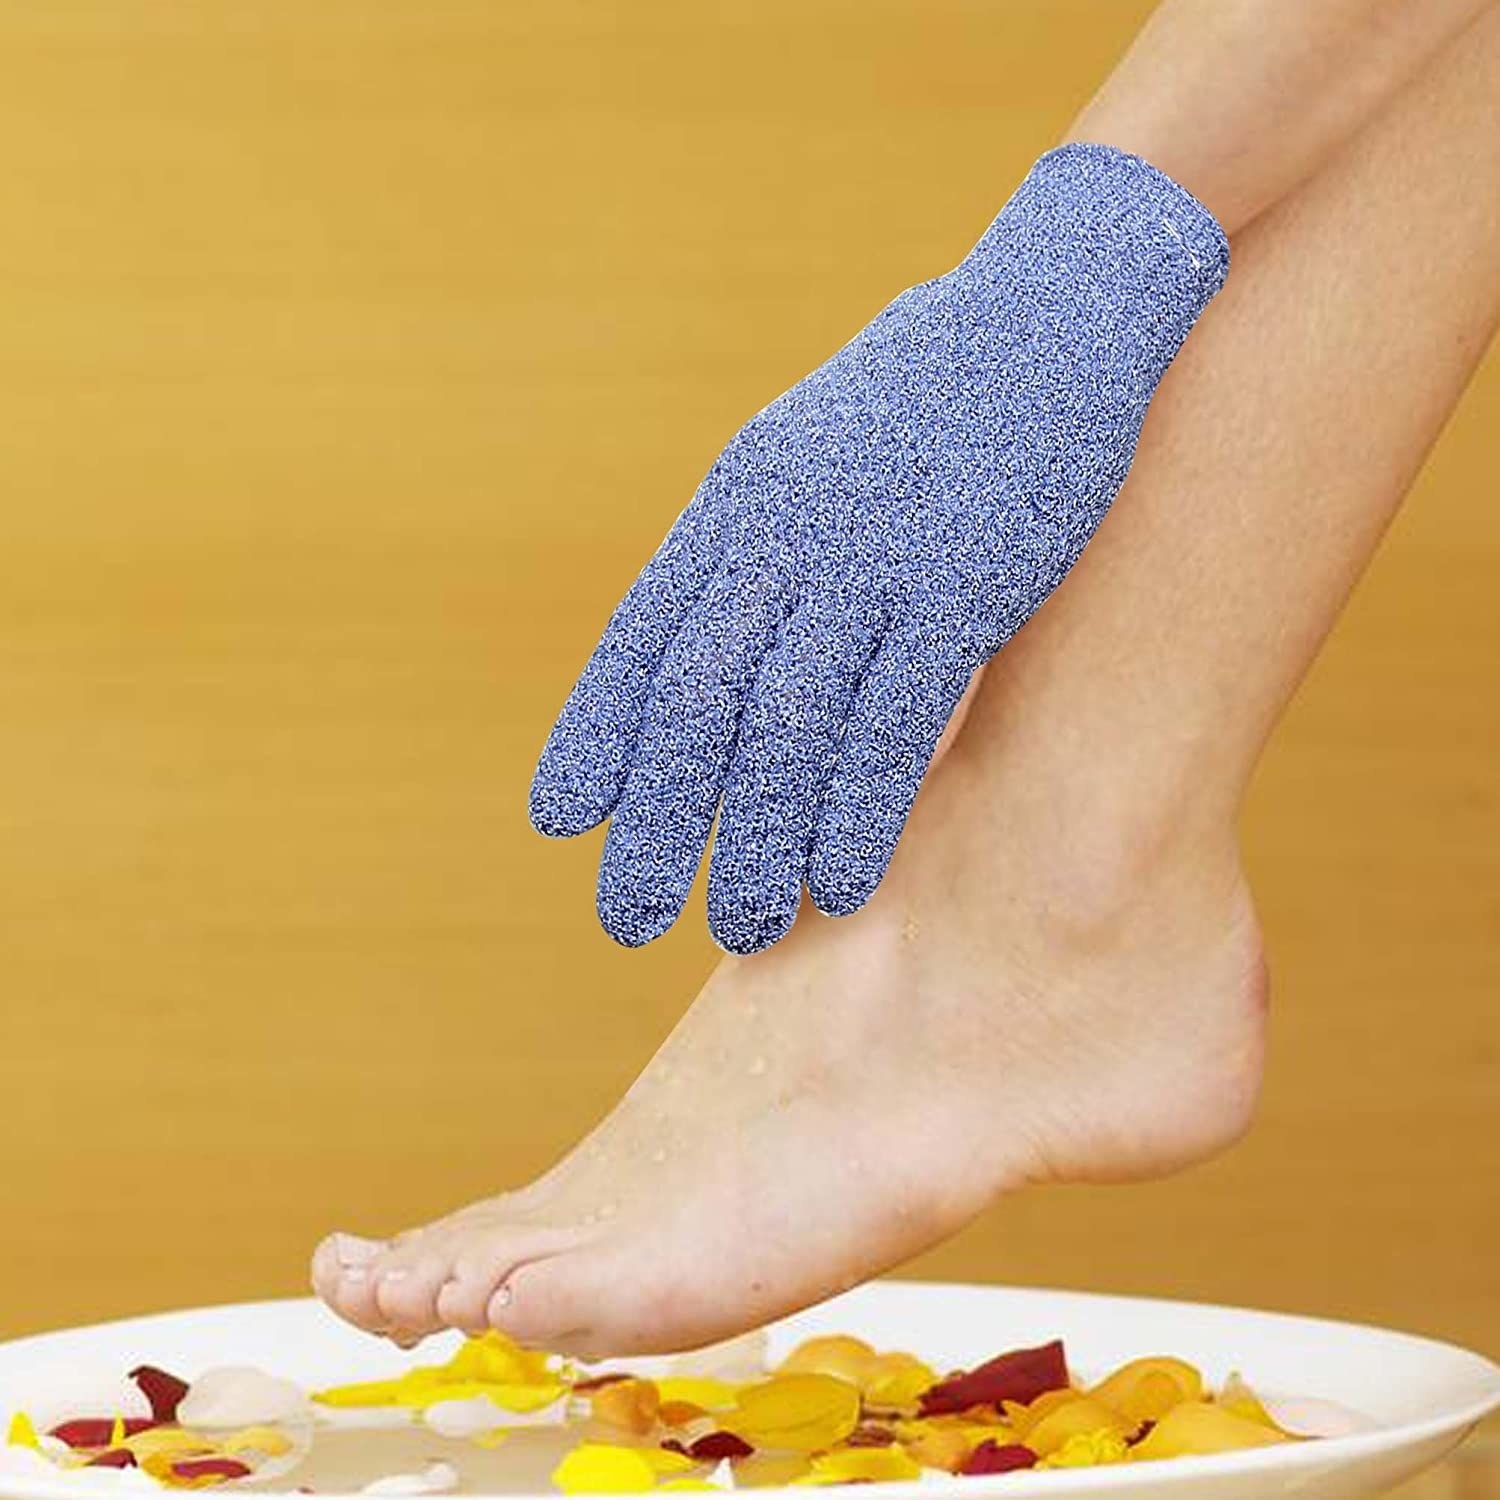 A person scrubbing their leg with a shower glove